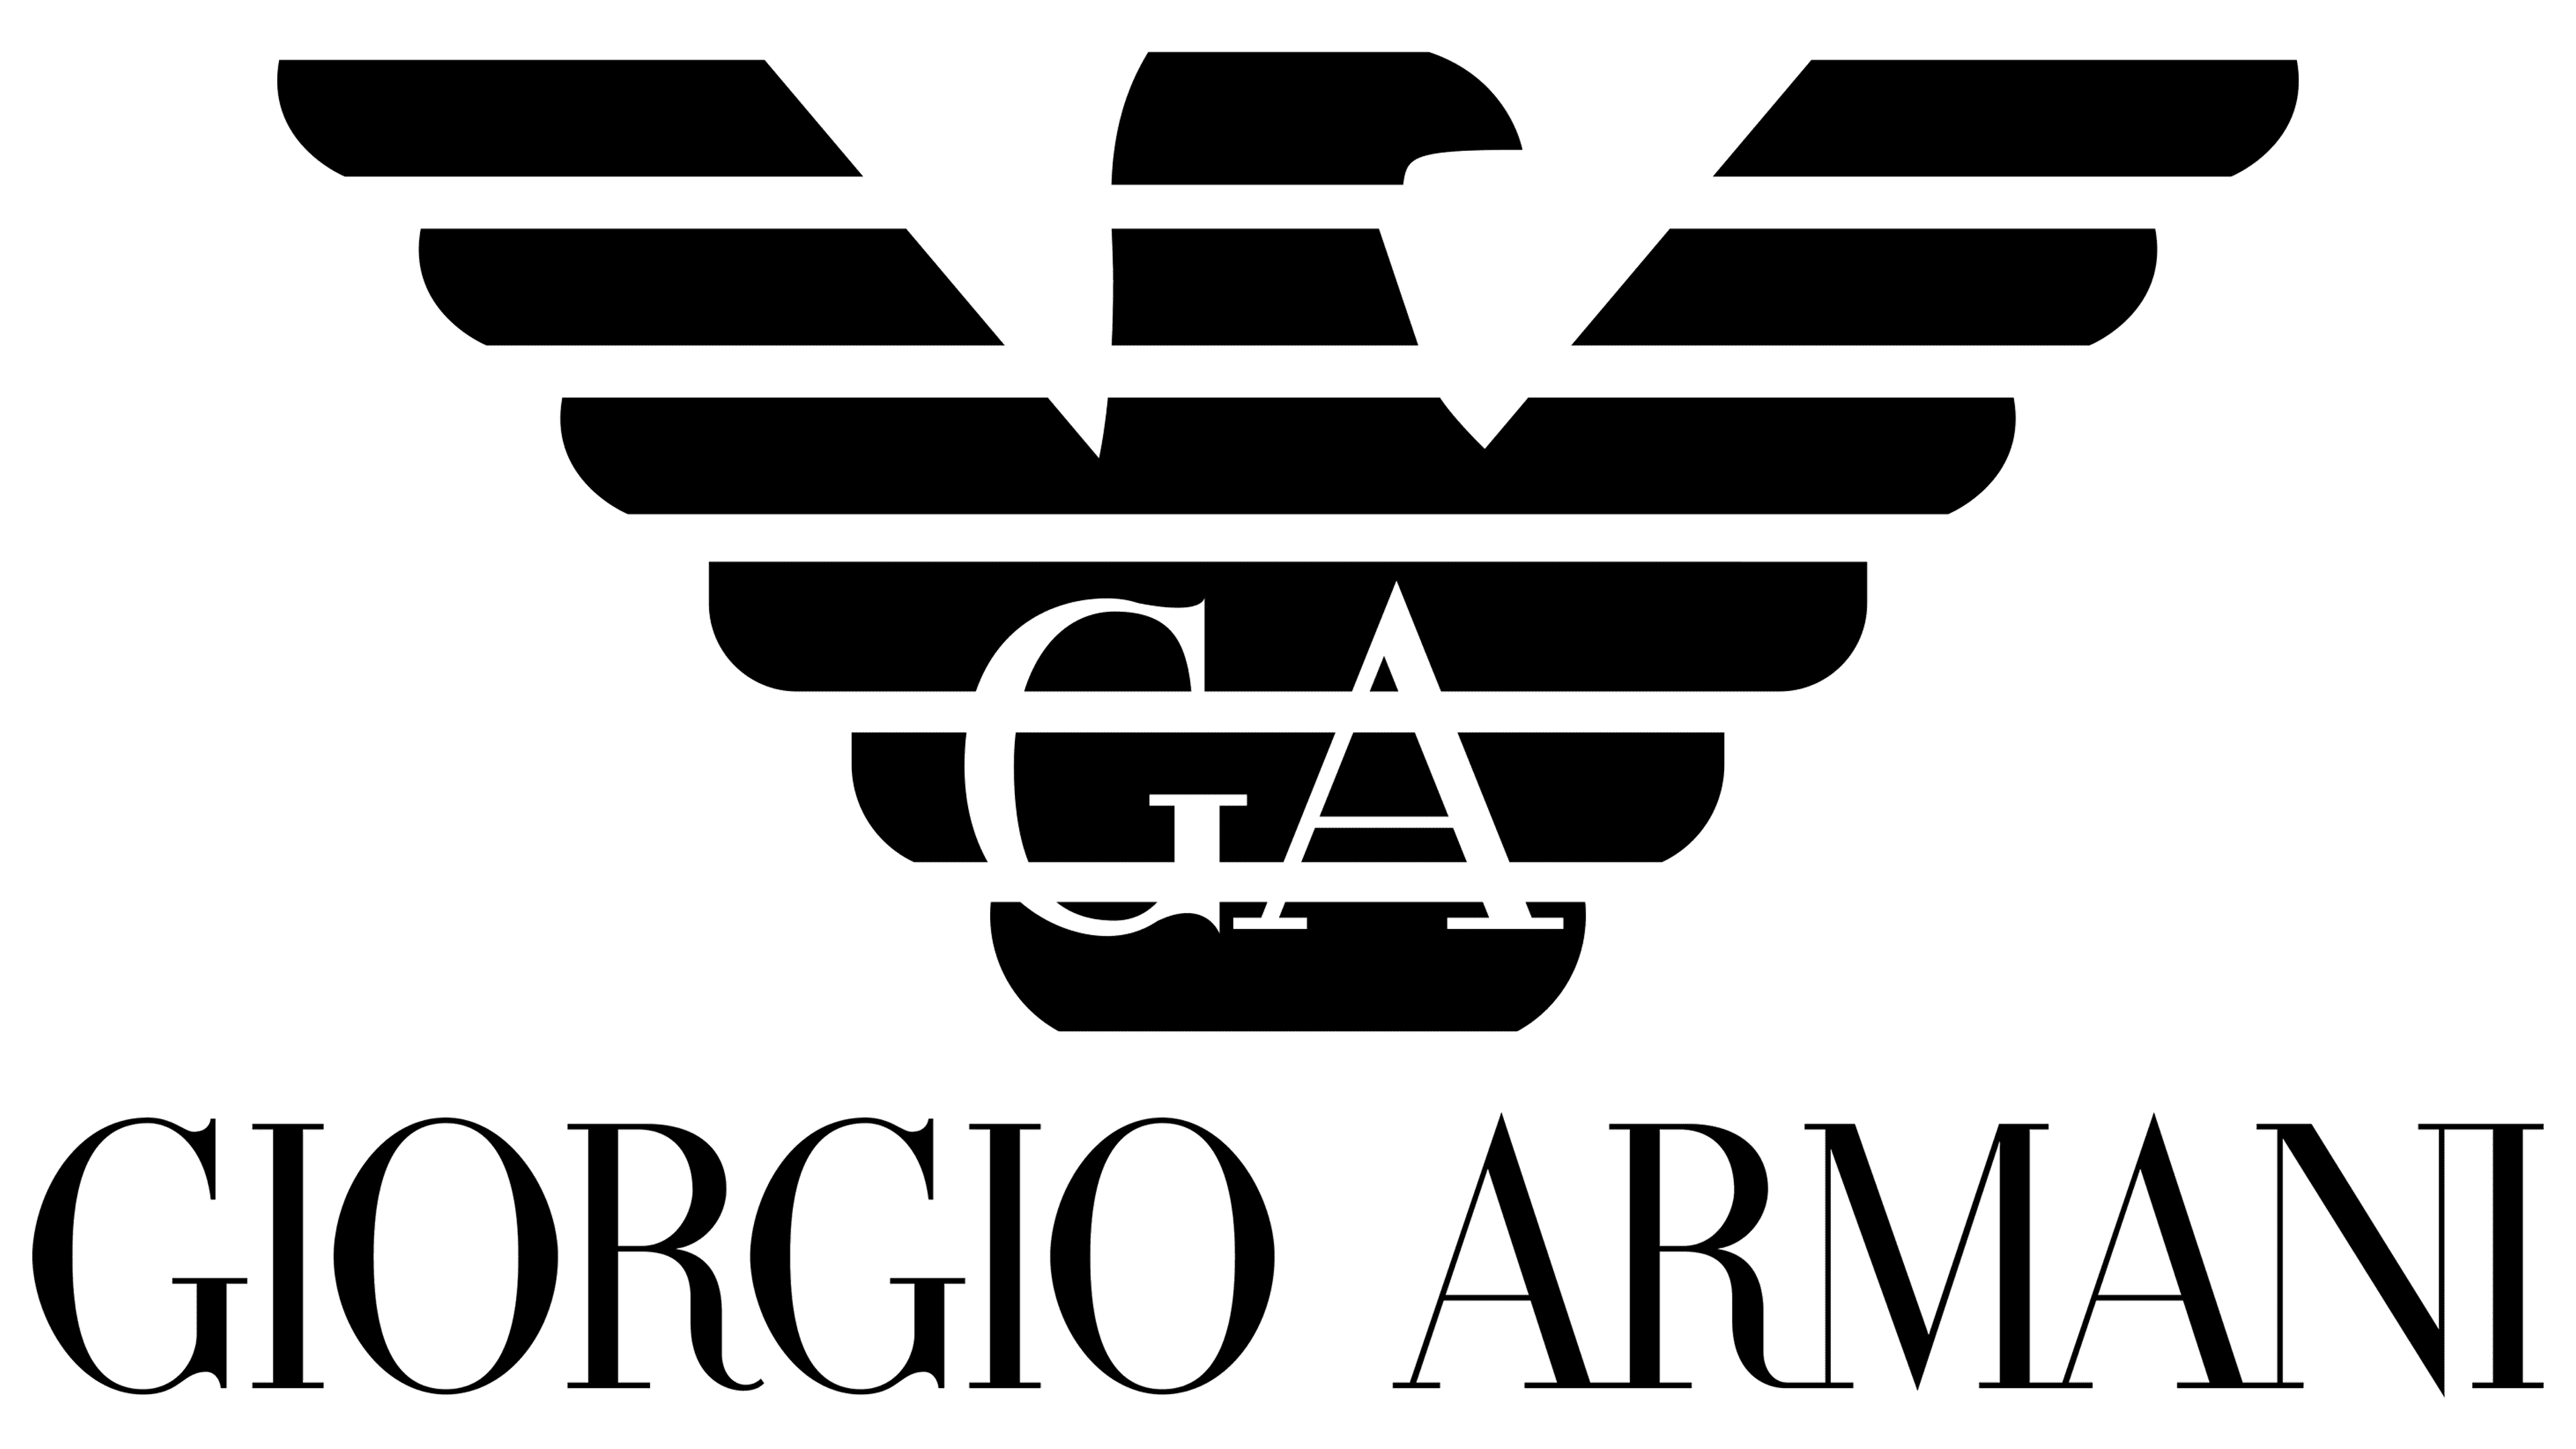 Giorgio Armani Brand Clothes Logo Symbol With Name Black And White Design  Fashion Vector Illustration 23585905 Vector Art at Vecteezy